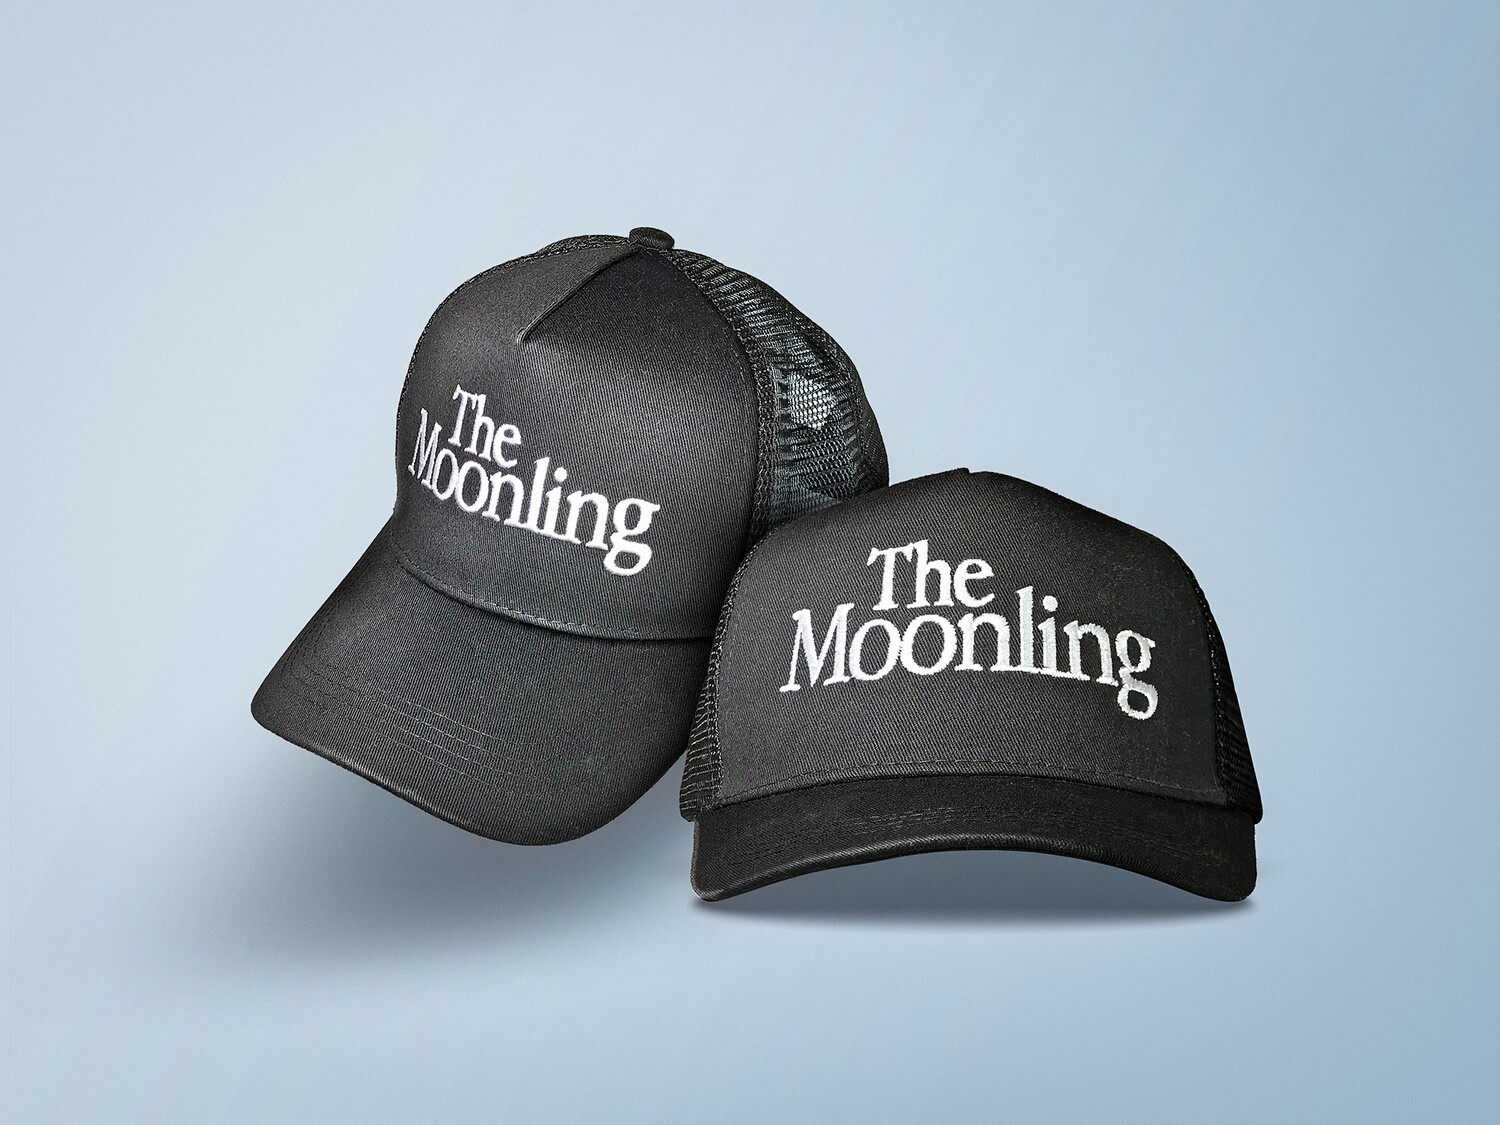 The Moonling trucker cap